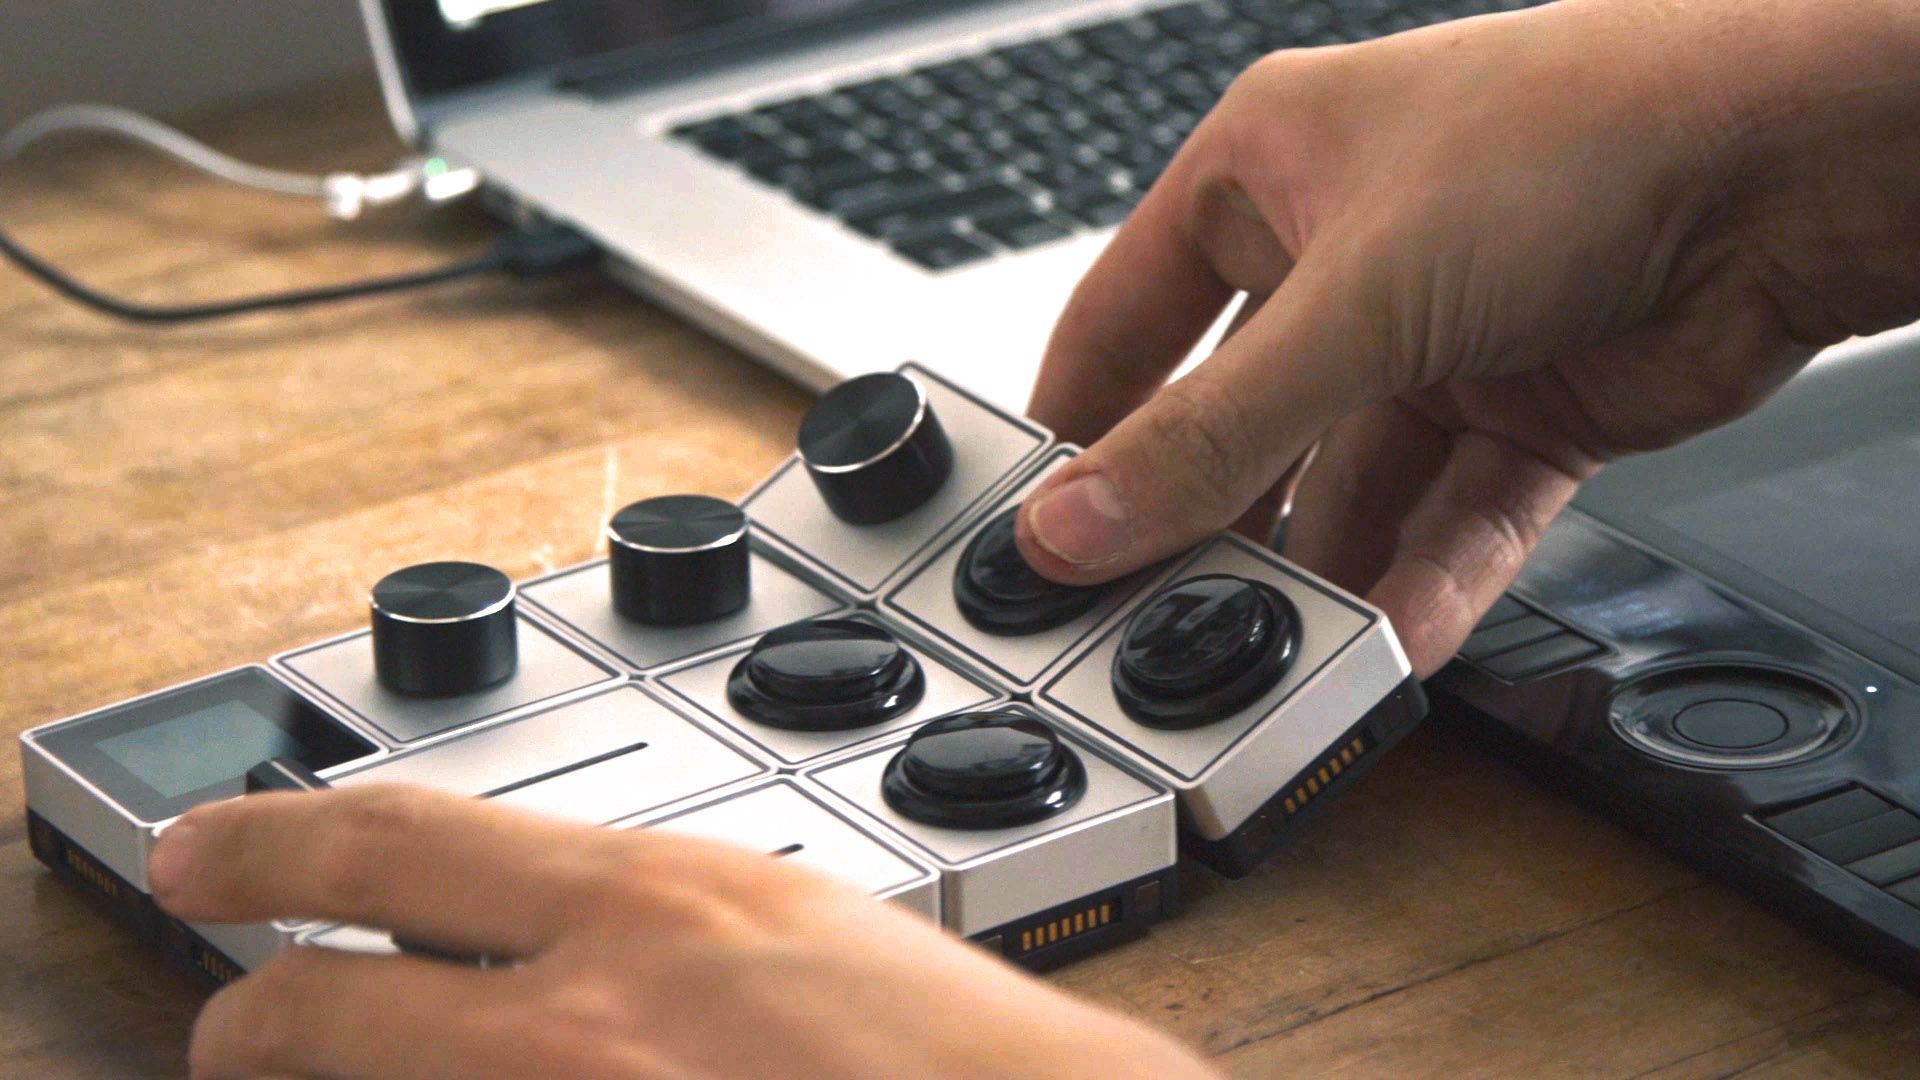 Review: Palette, A Modular MIDI Controller